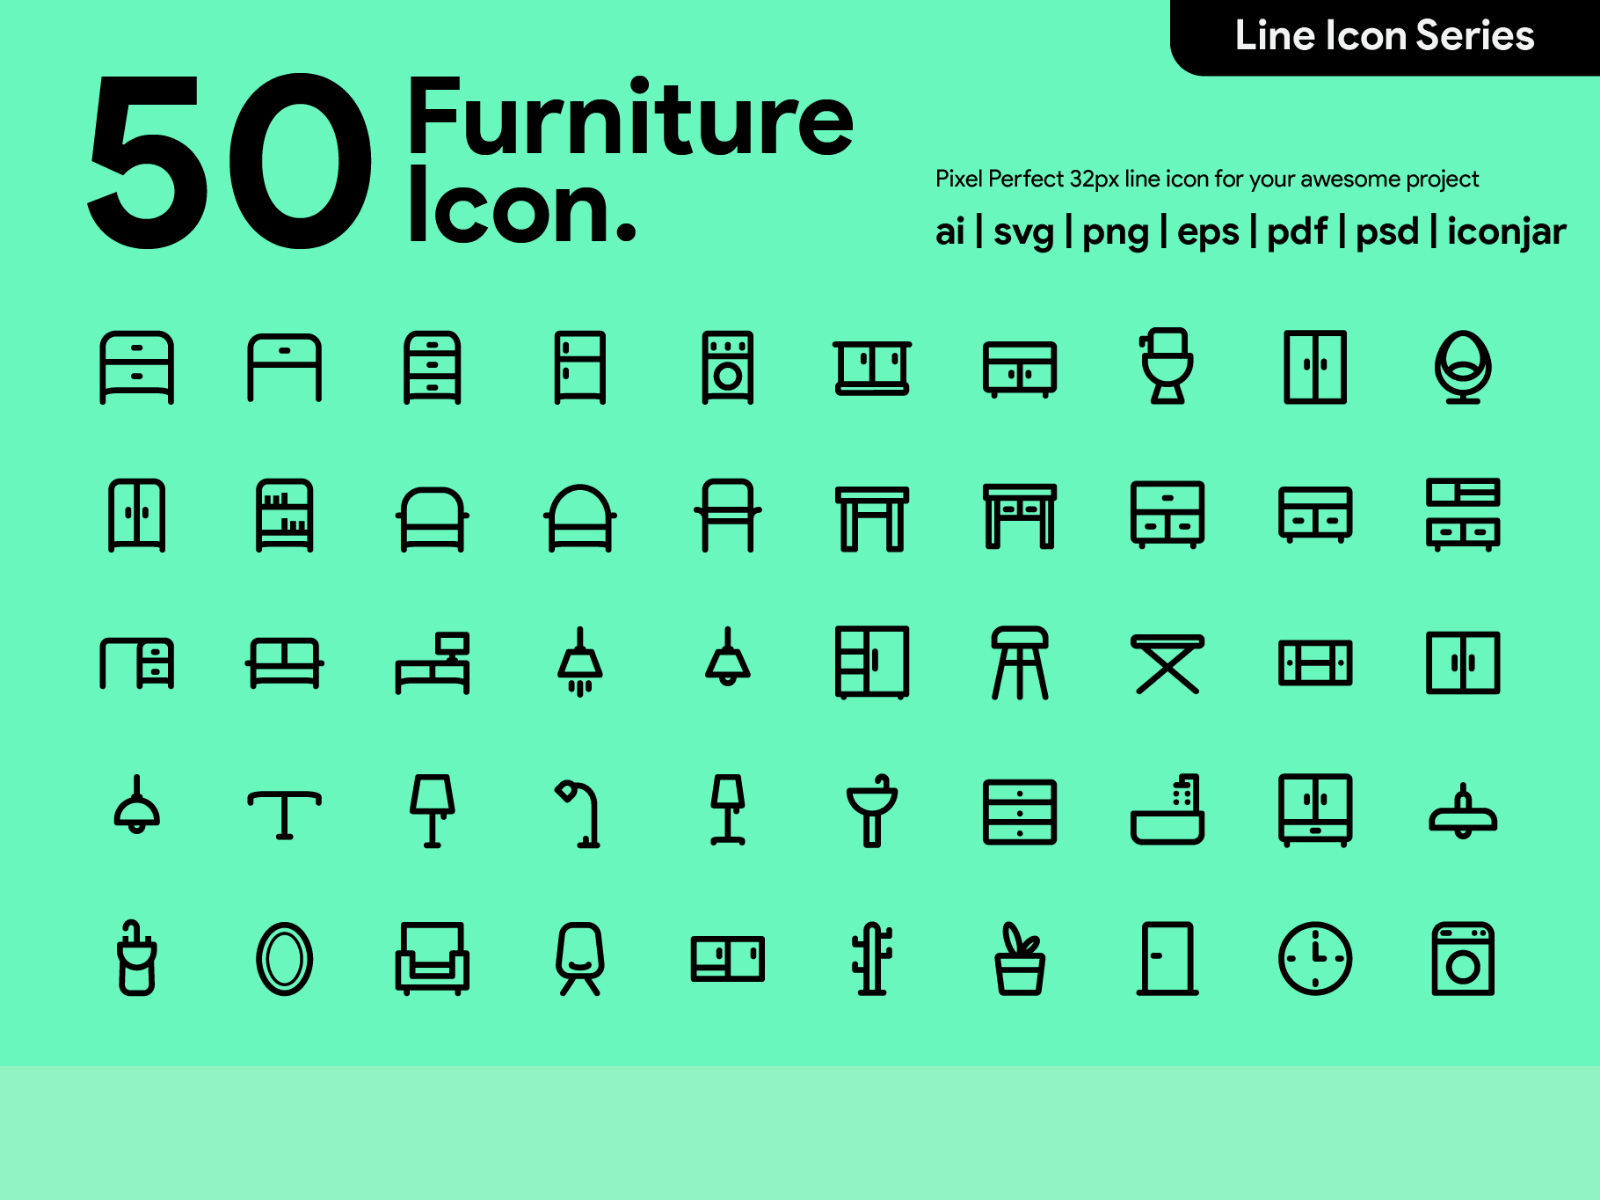 App icons design idea #250: Kawaicon - 50 Furniture Line icon